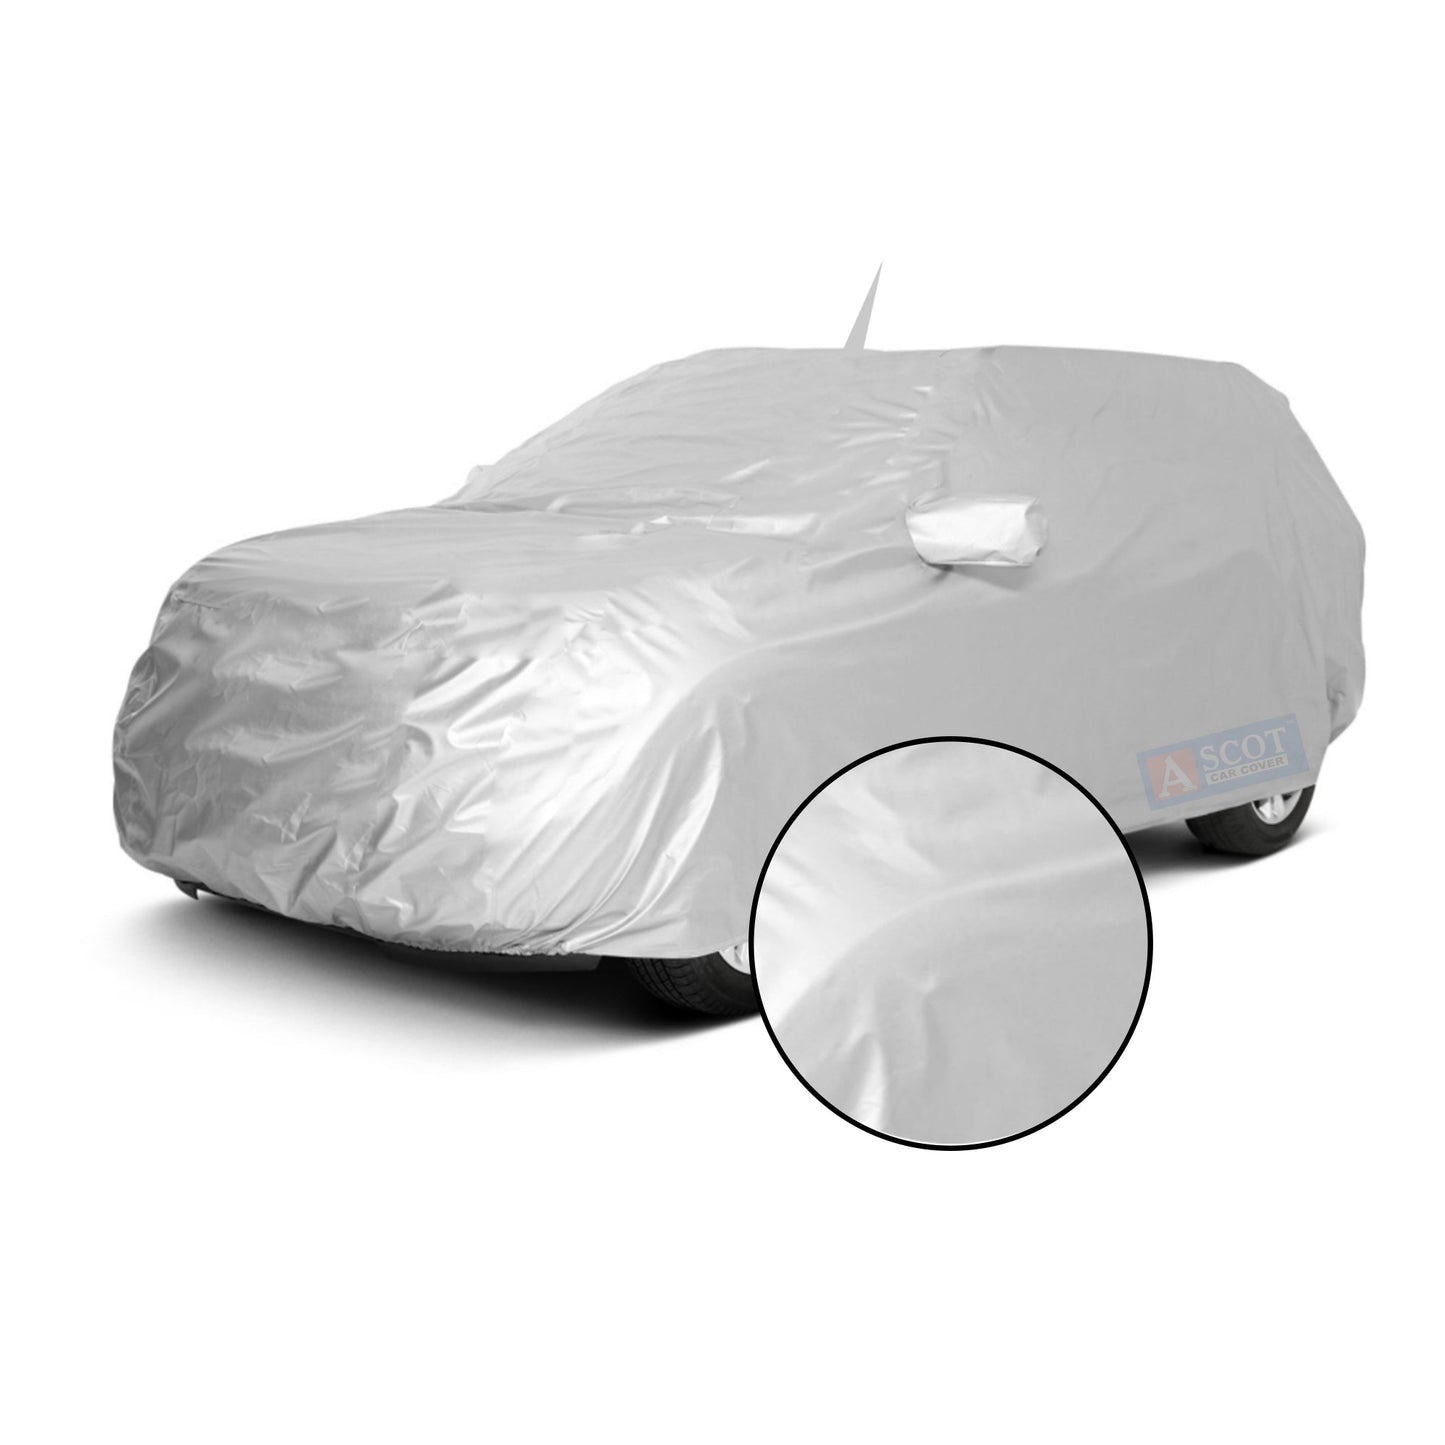 Ascot Mercedes-Benz GLS 2013-2020 Model Car Body Cover Dust Proof, Trippel Stitched